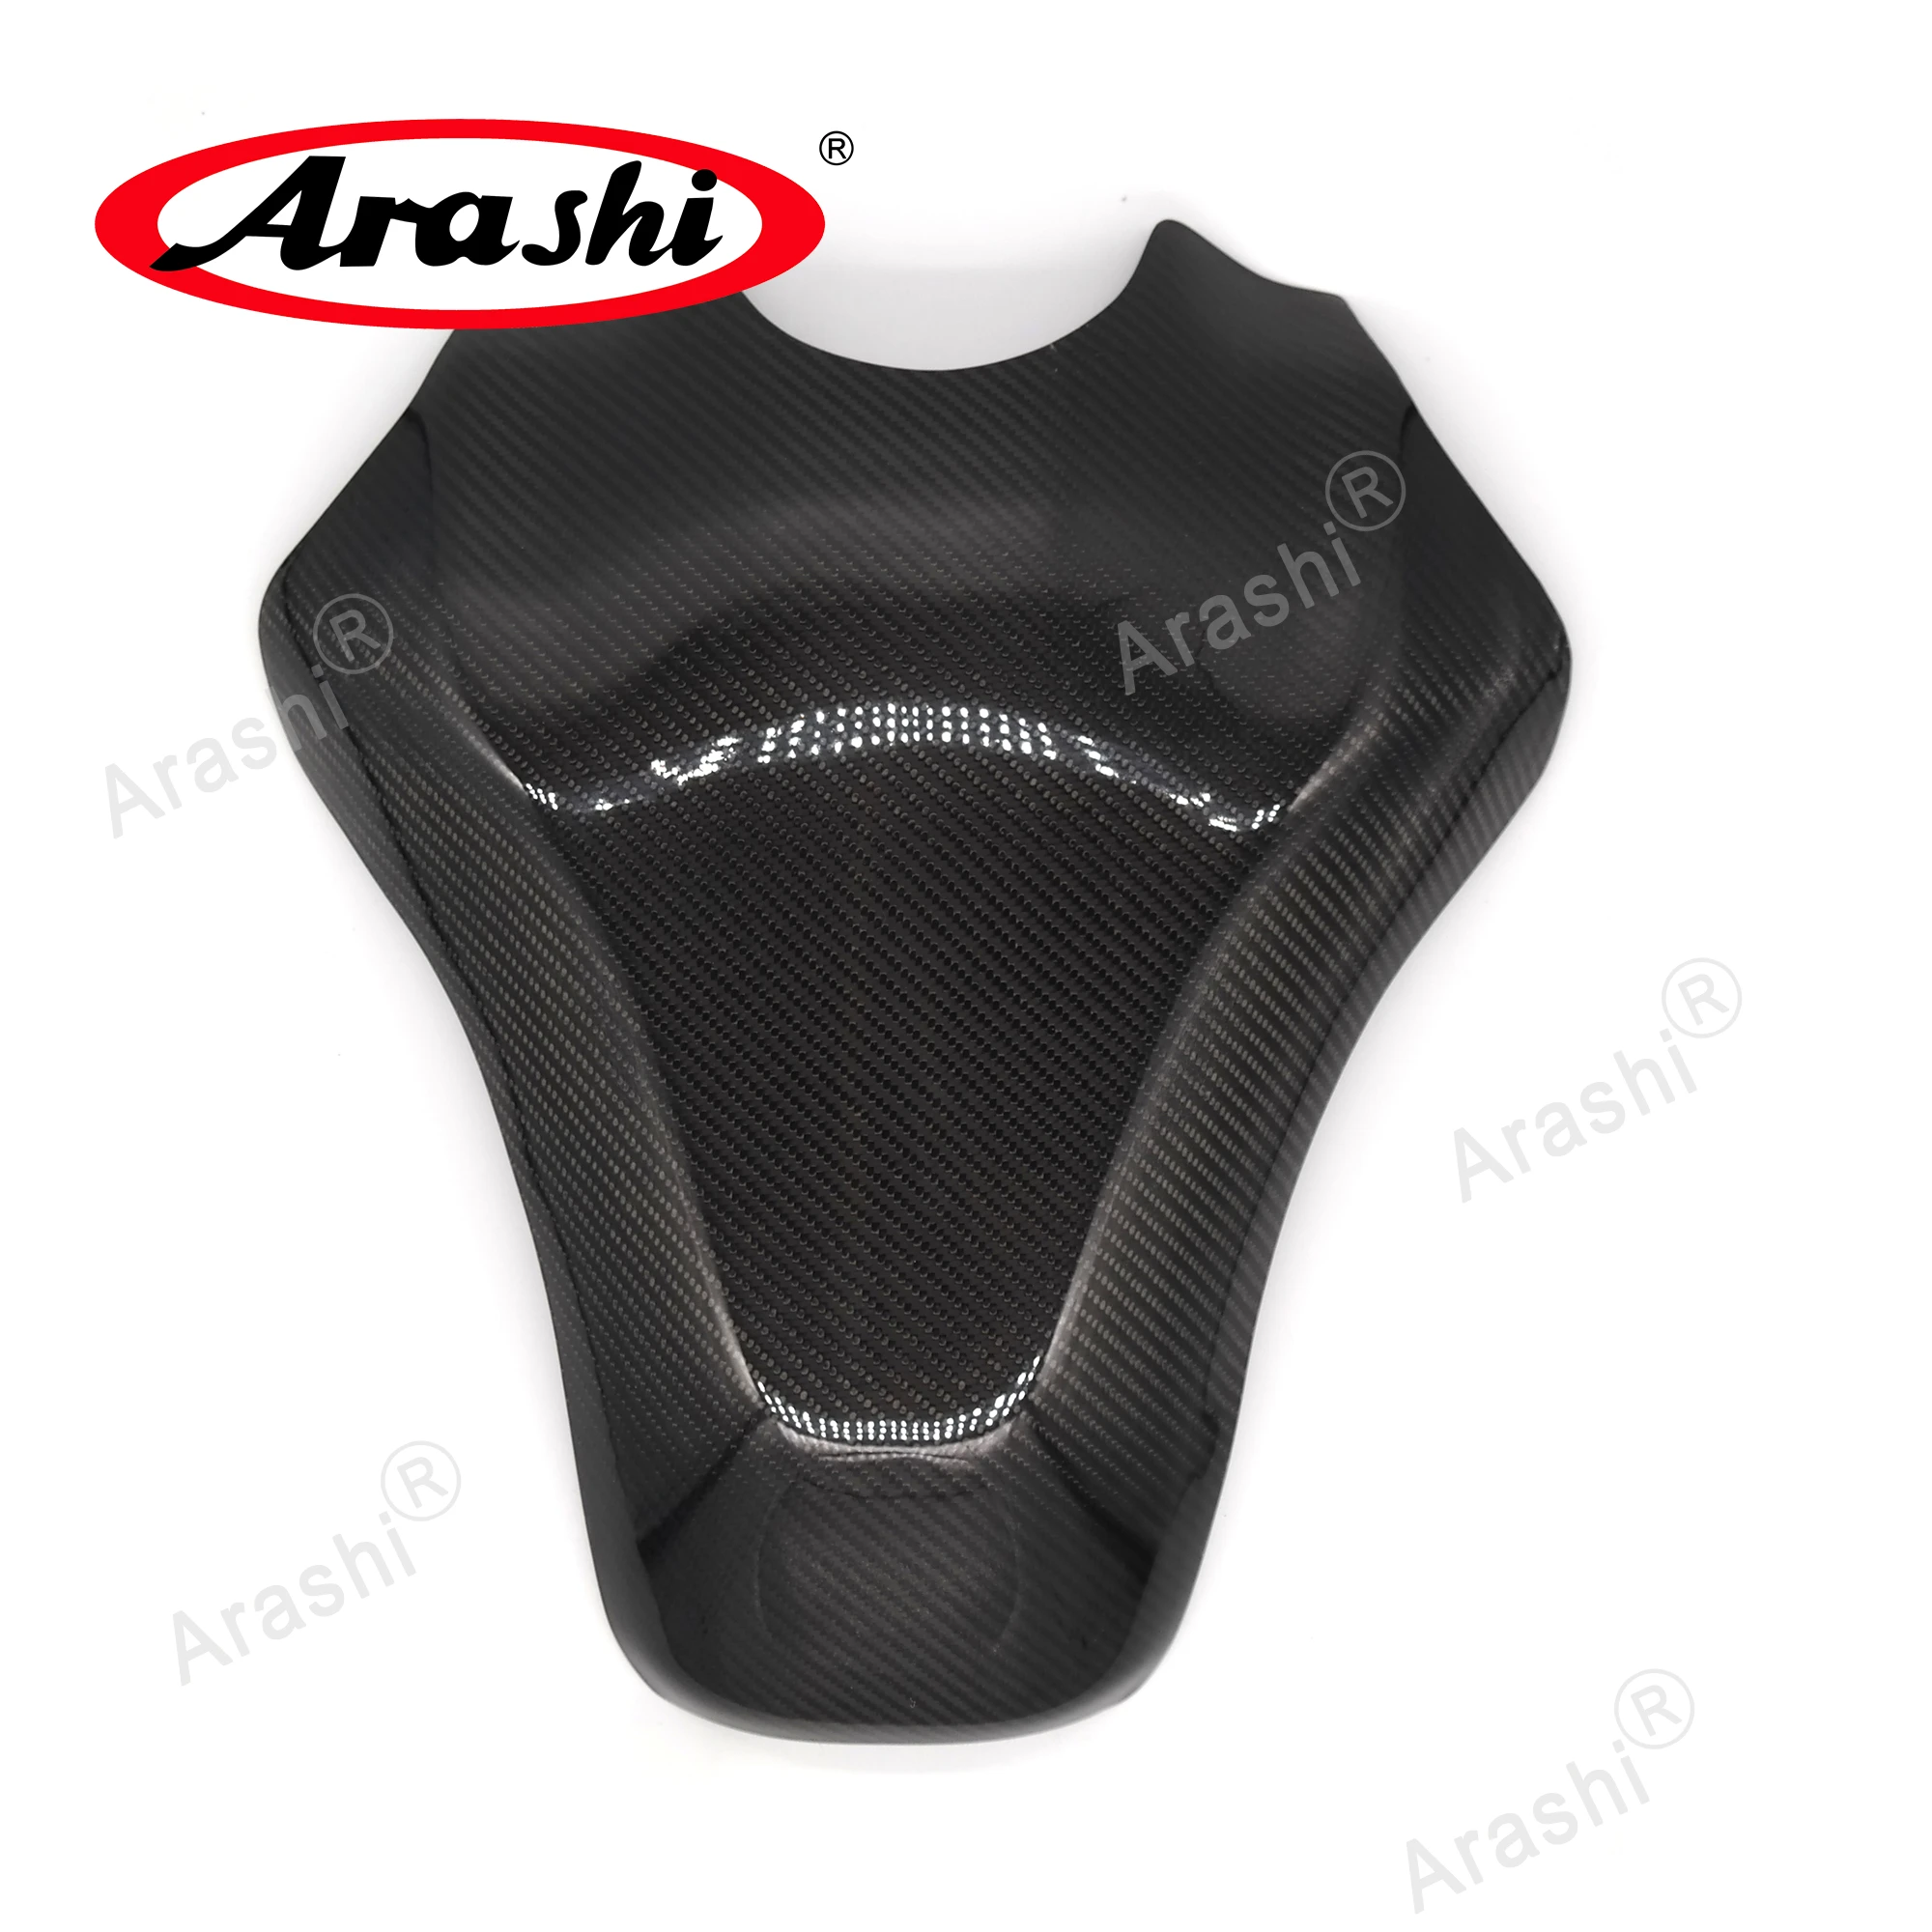 

For KAWASAKI Z900 Z 900 2017 2018 2019 2020 Arashi Carbon Fiber Material Motorcycle Fairing Cowling Gas Tank Protector Pad Cover